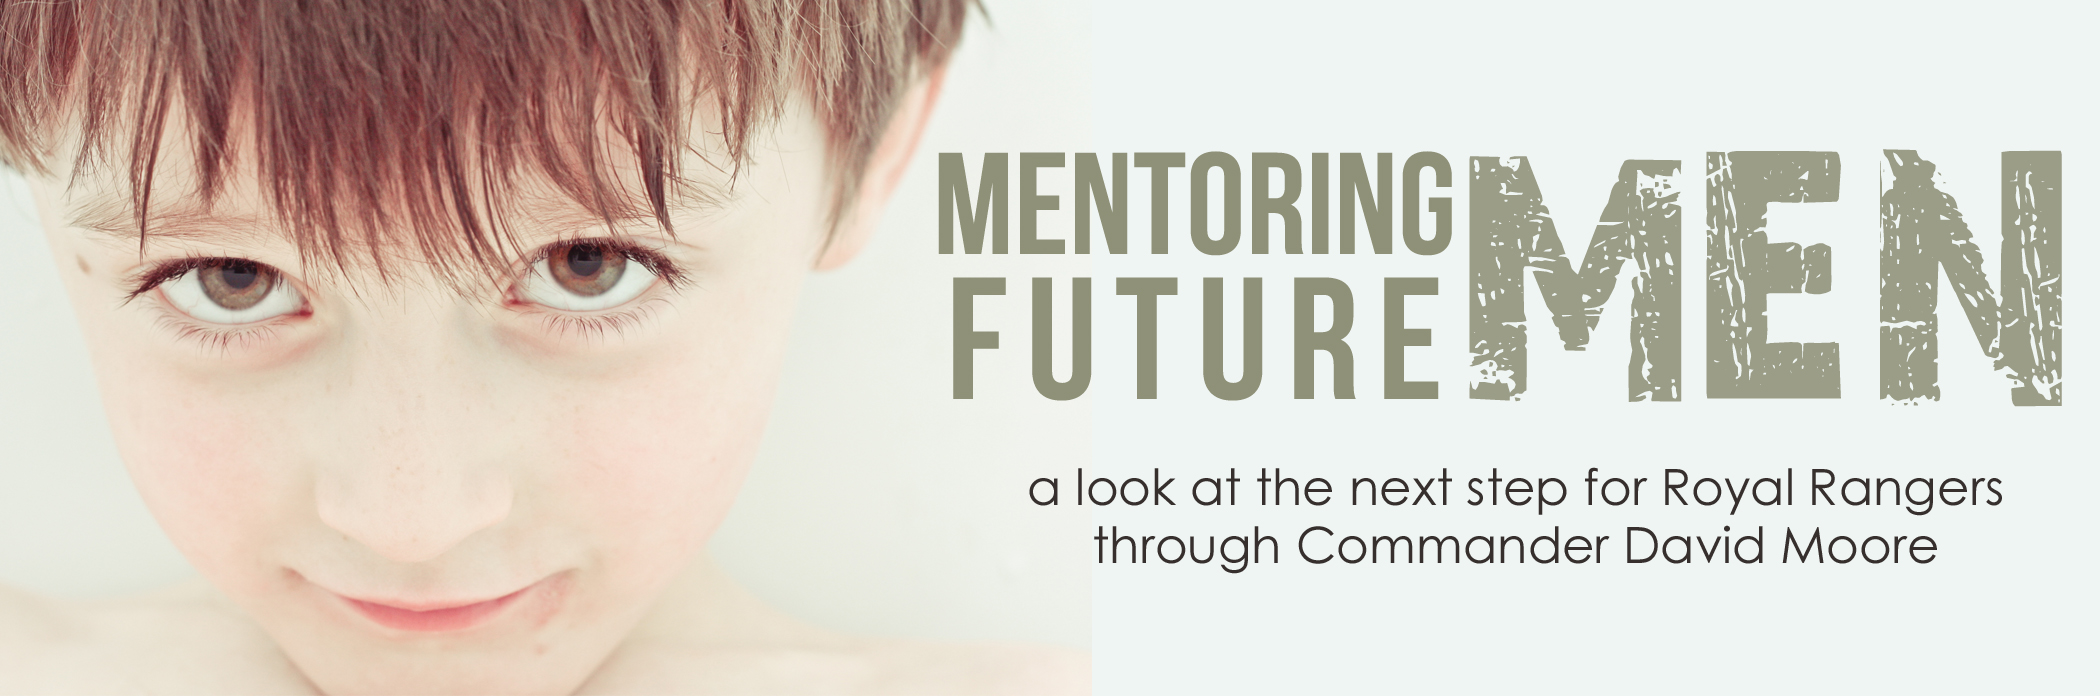 mentoring future men